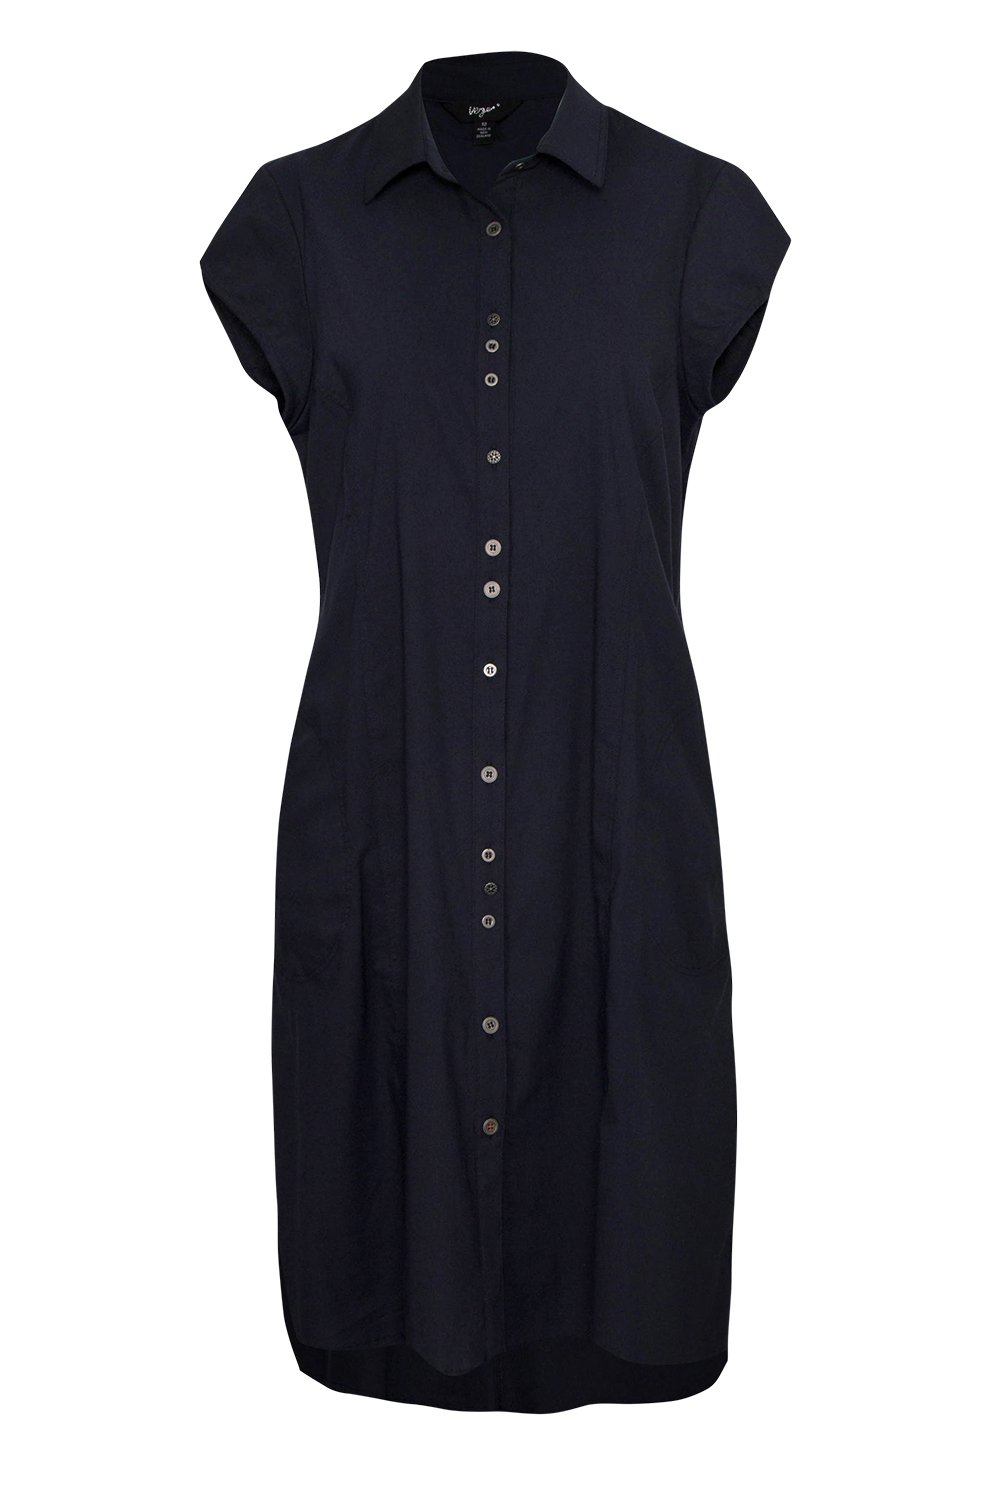 Dress, $260, by Verge.